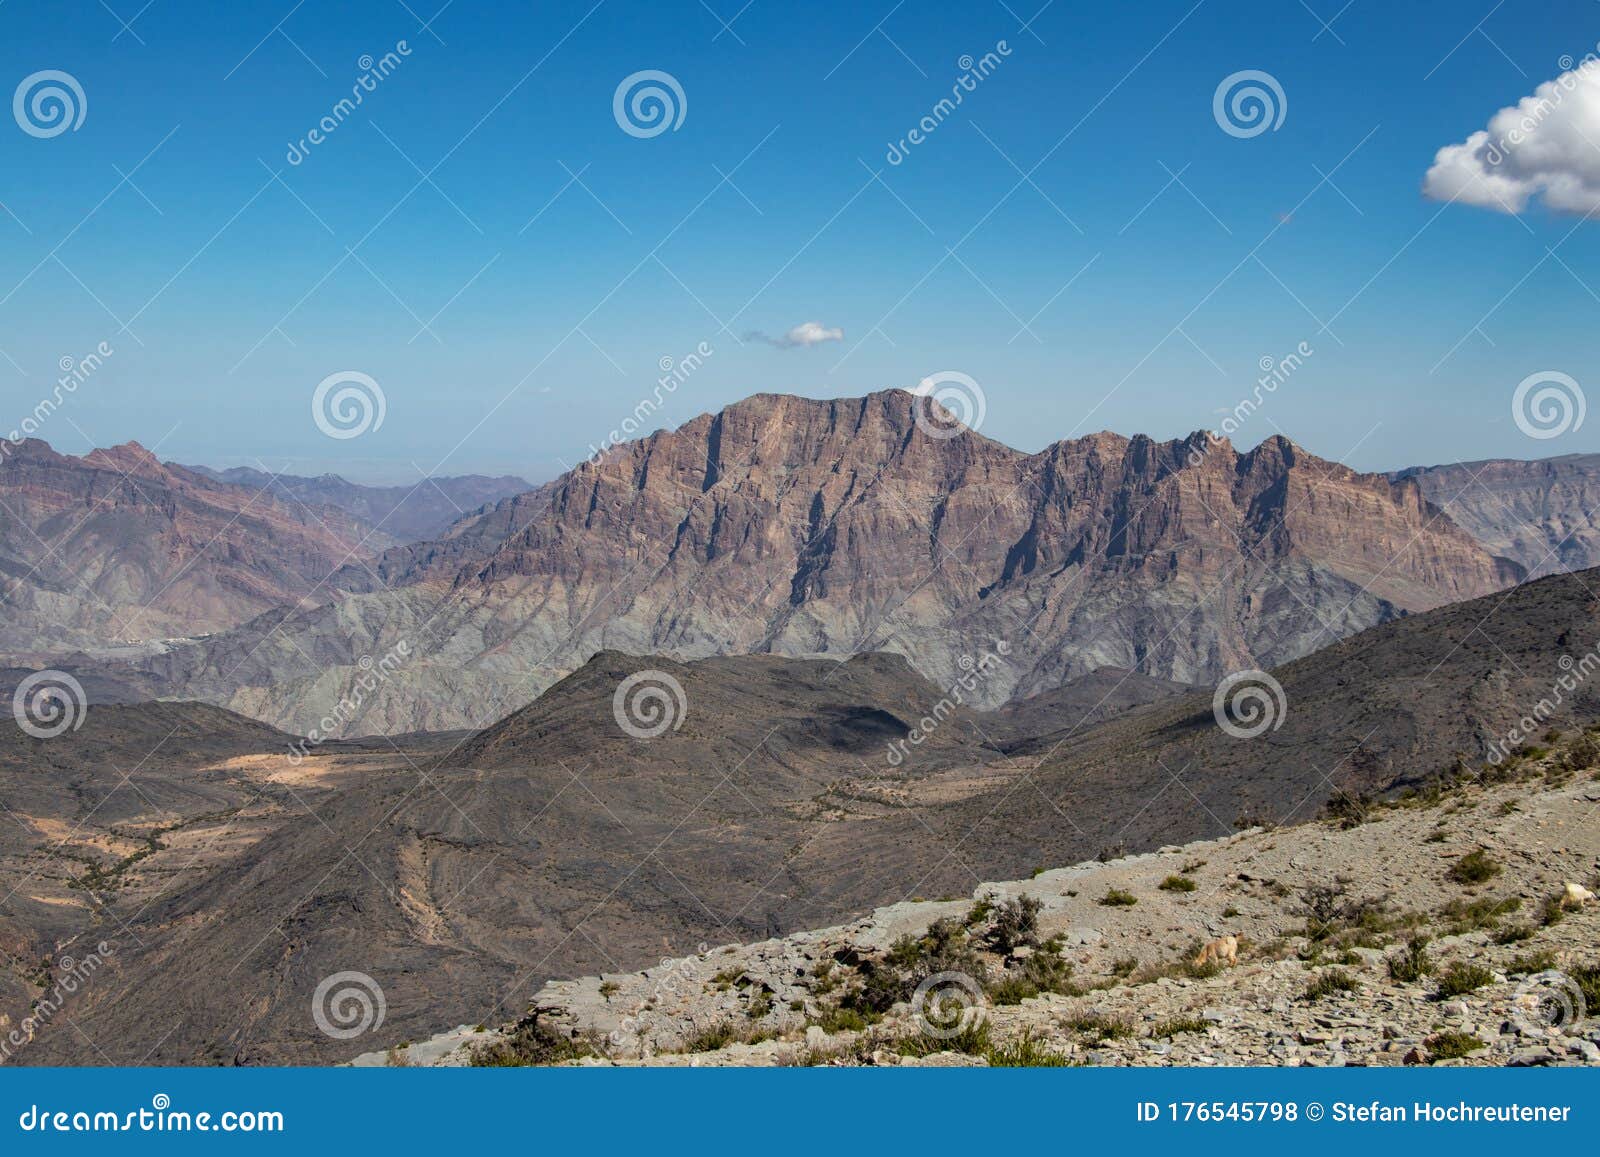 mountain and valley view along wadi sahtan road in al hajir mountains between nizwa and mascat in oman